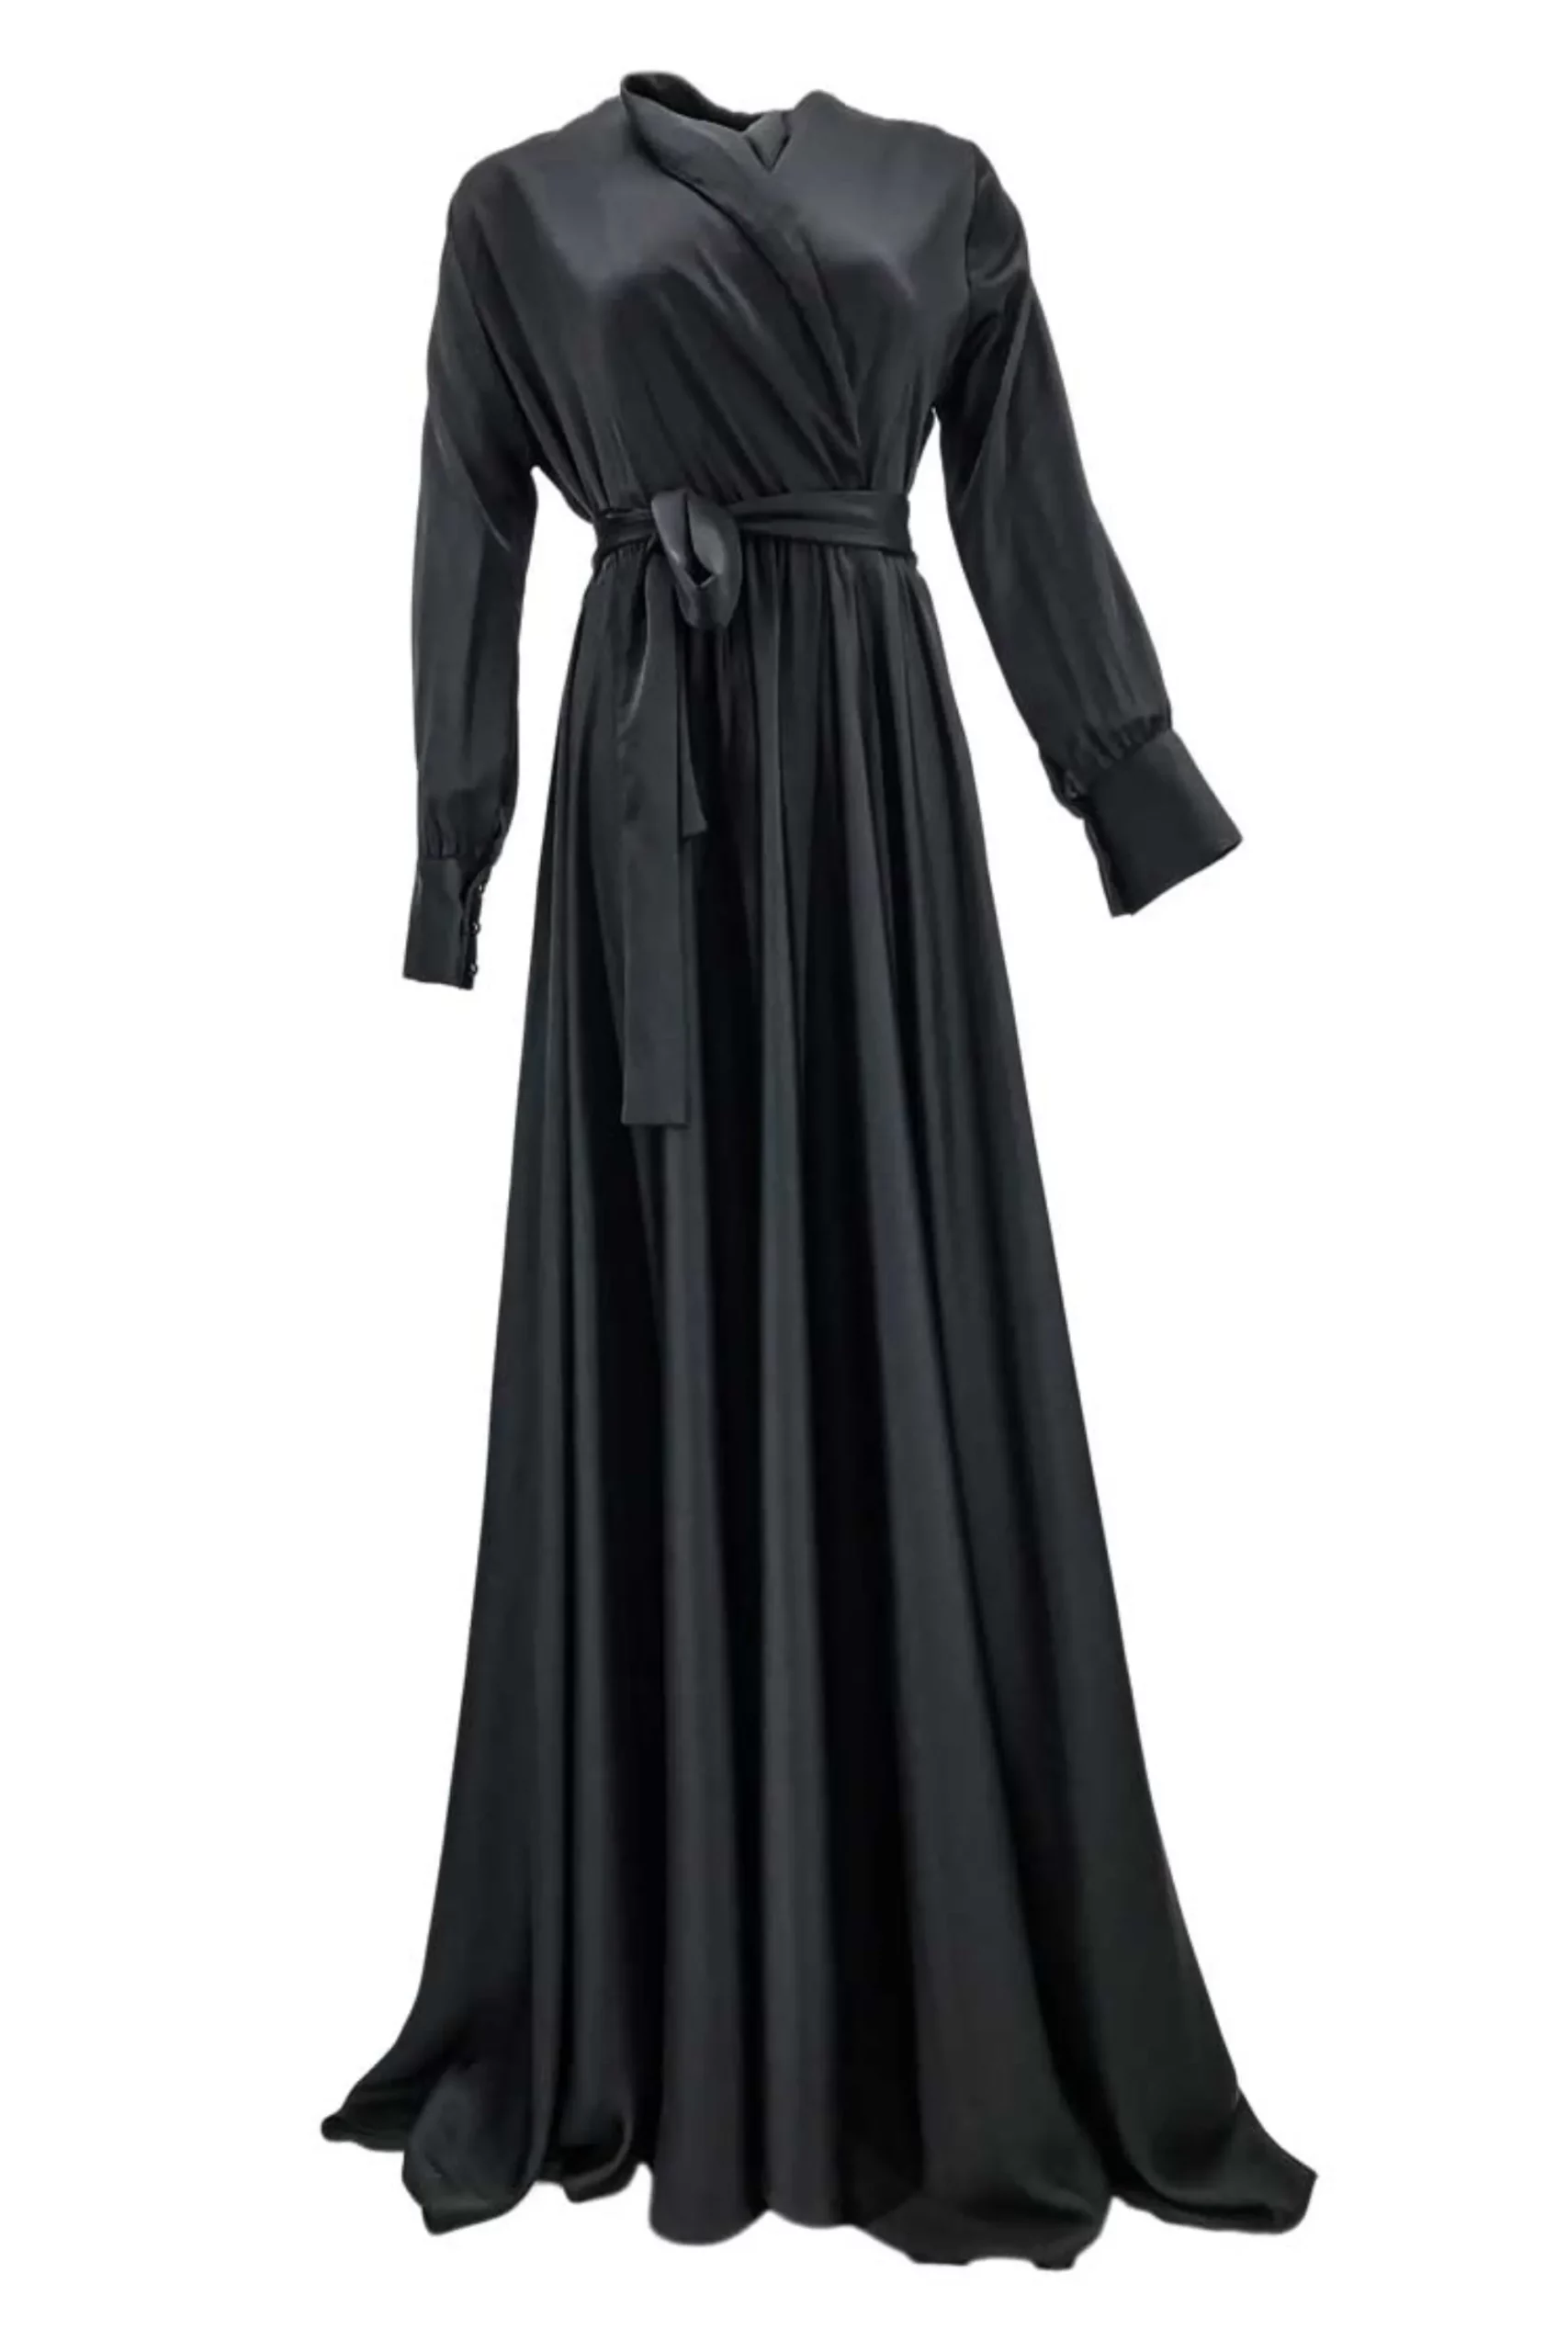 Imani Black Satin Semi Formal Dress